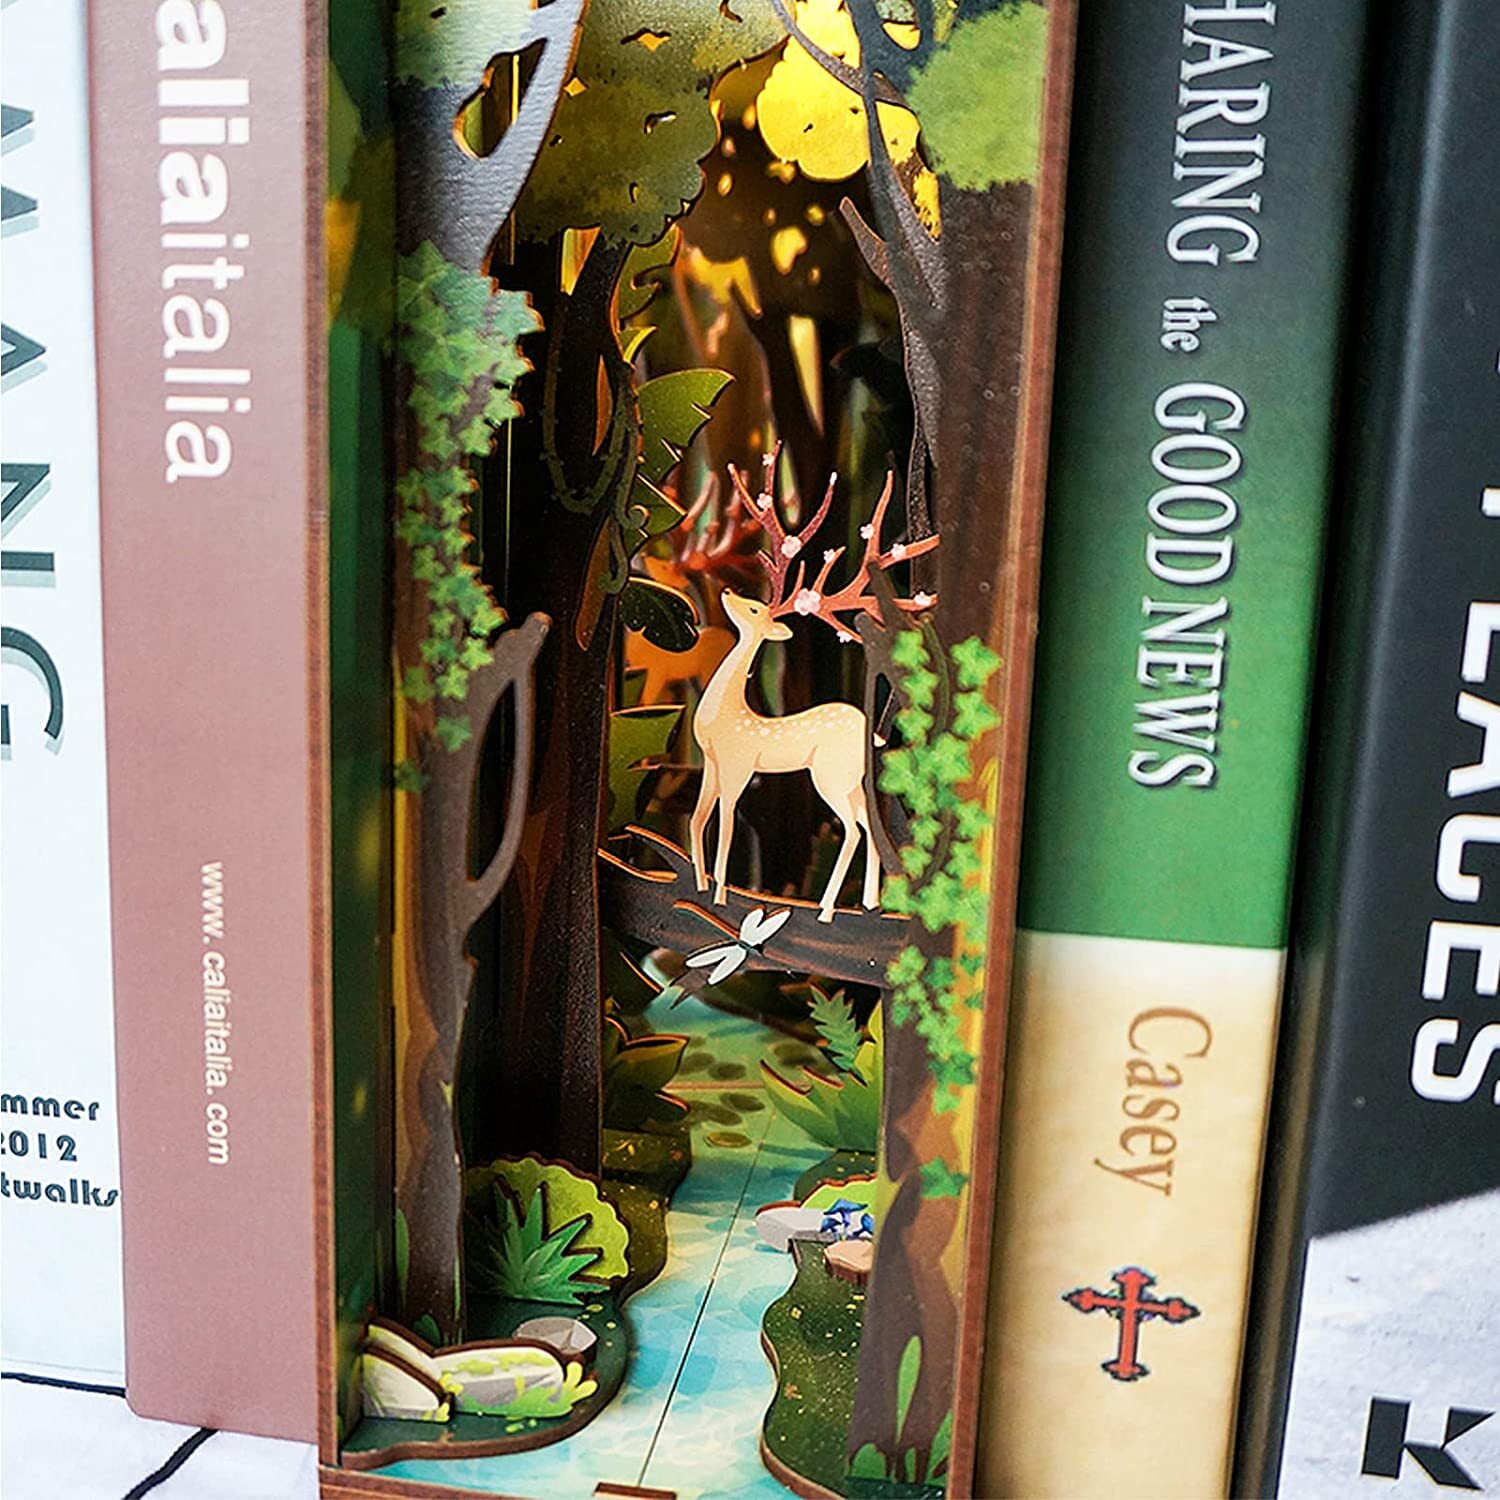 Desmond DIY Book Nook Kit, Miniature Dollhouse Kit 3D Wooden Puzzle with Sensor Light Booknook Bookshelf Insert Diorama Forest Deer Tiny Alley Decor Bookshelf Kits to Build for Kids/Adults